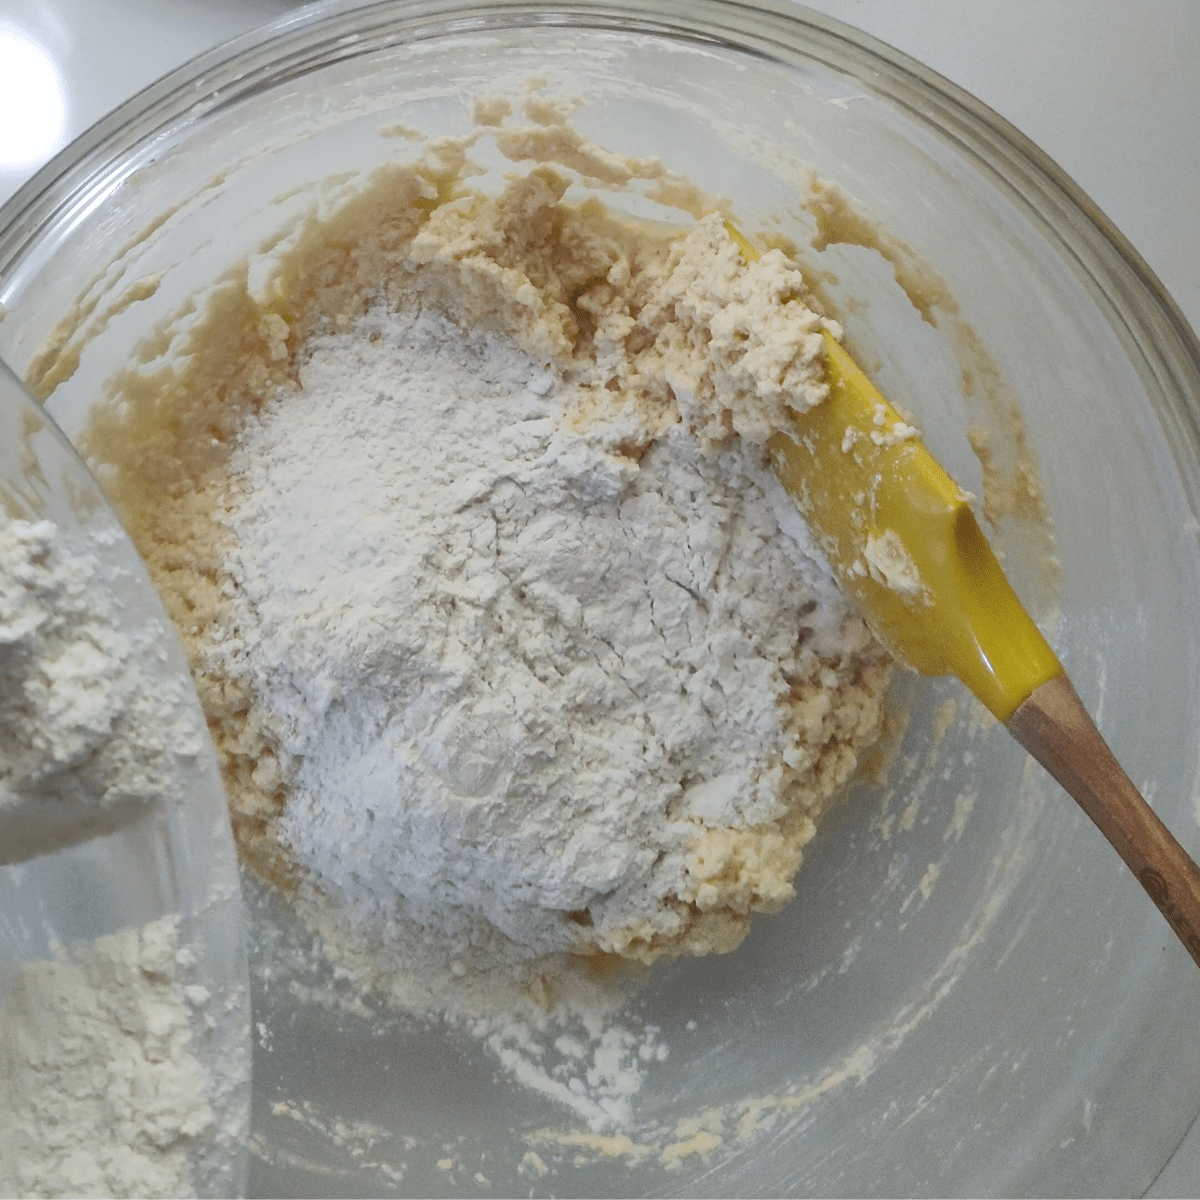 Flour mixture toegg mixture